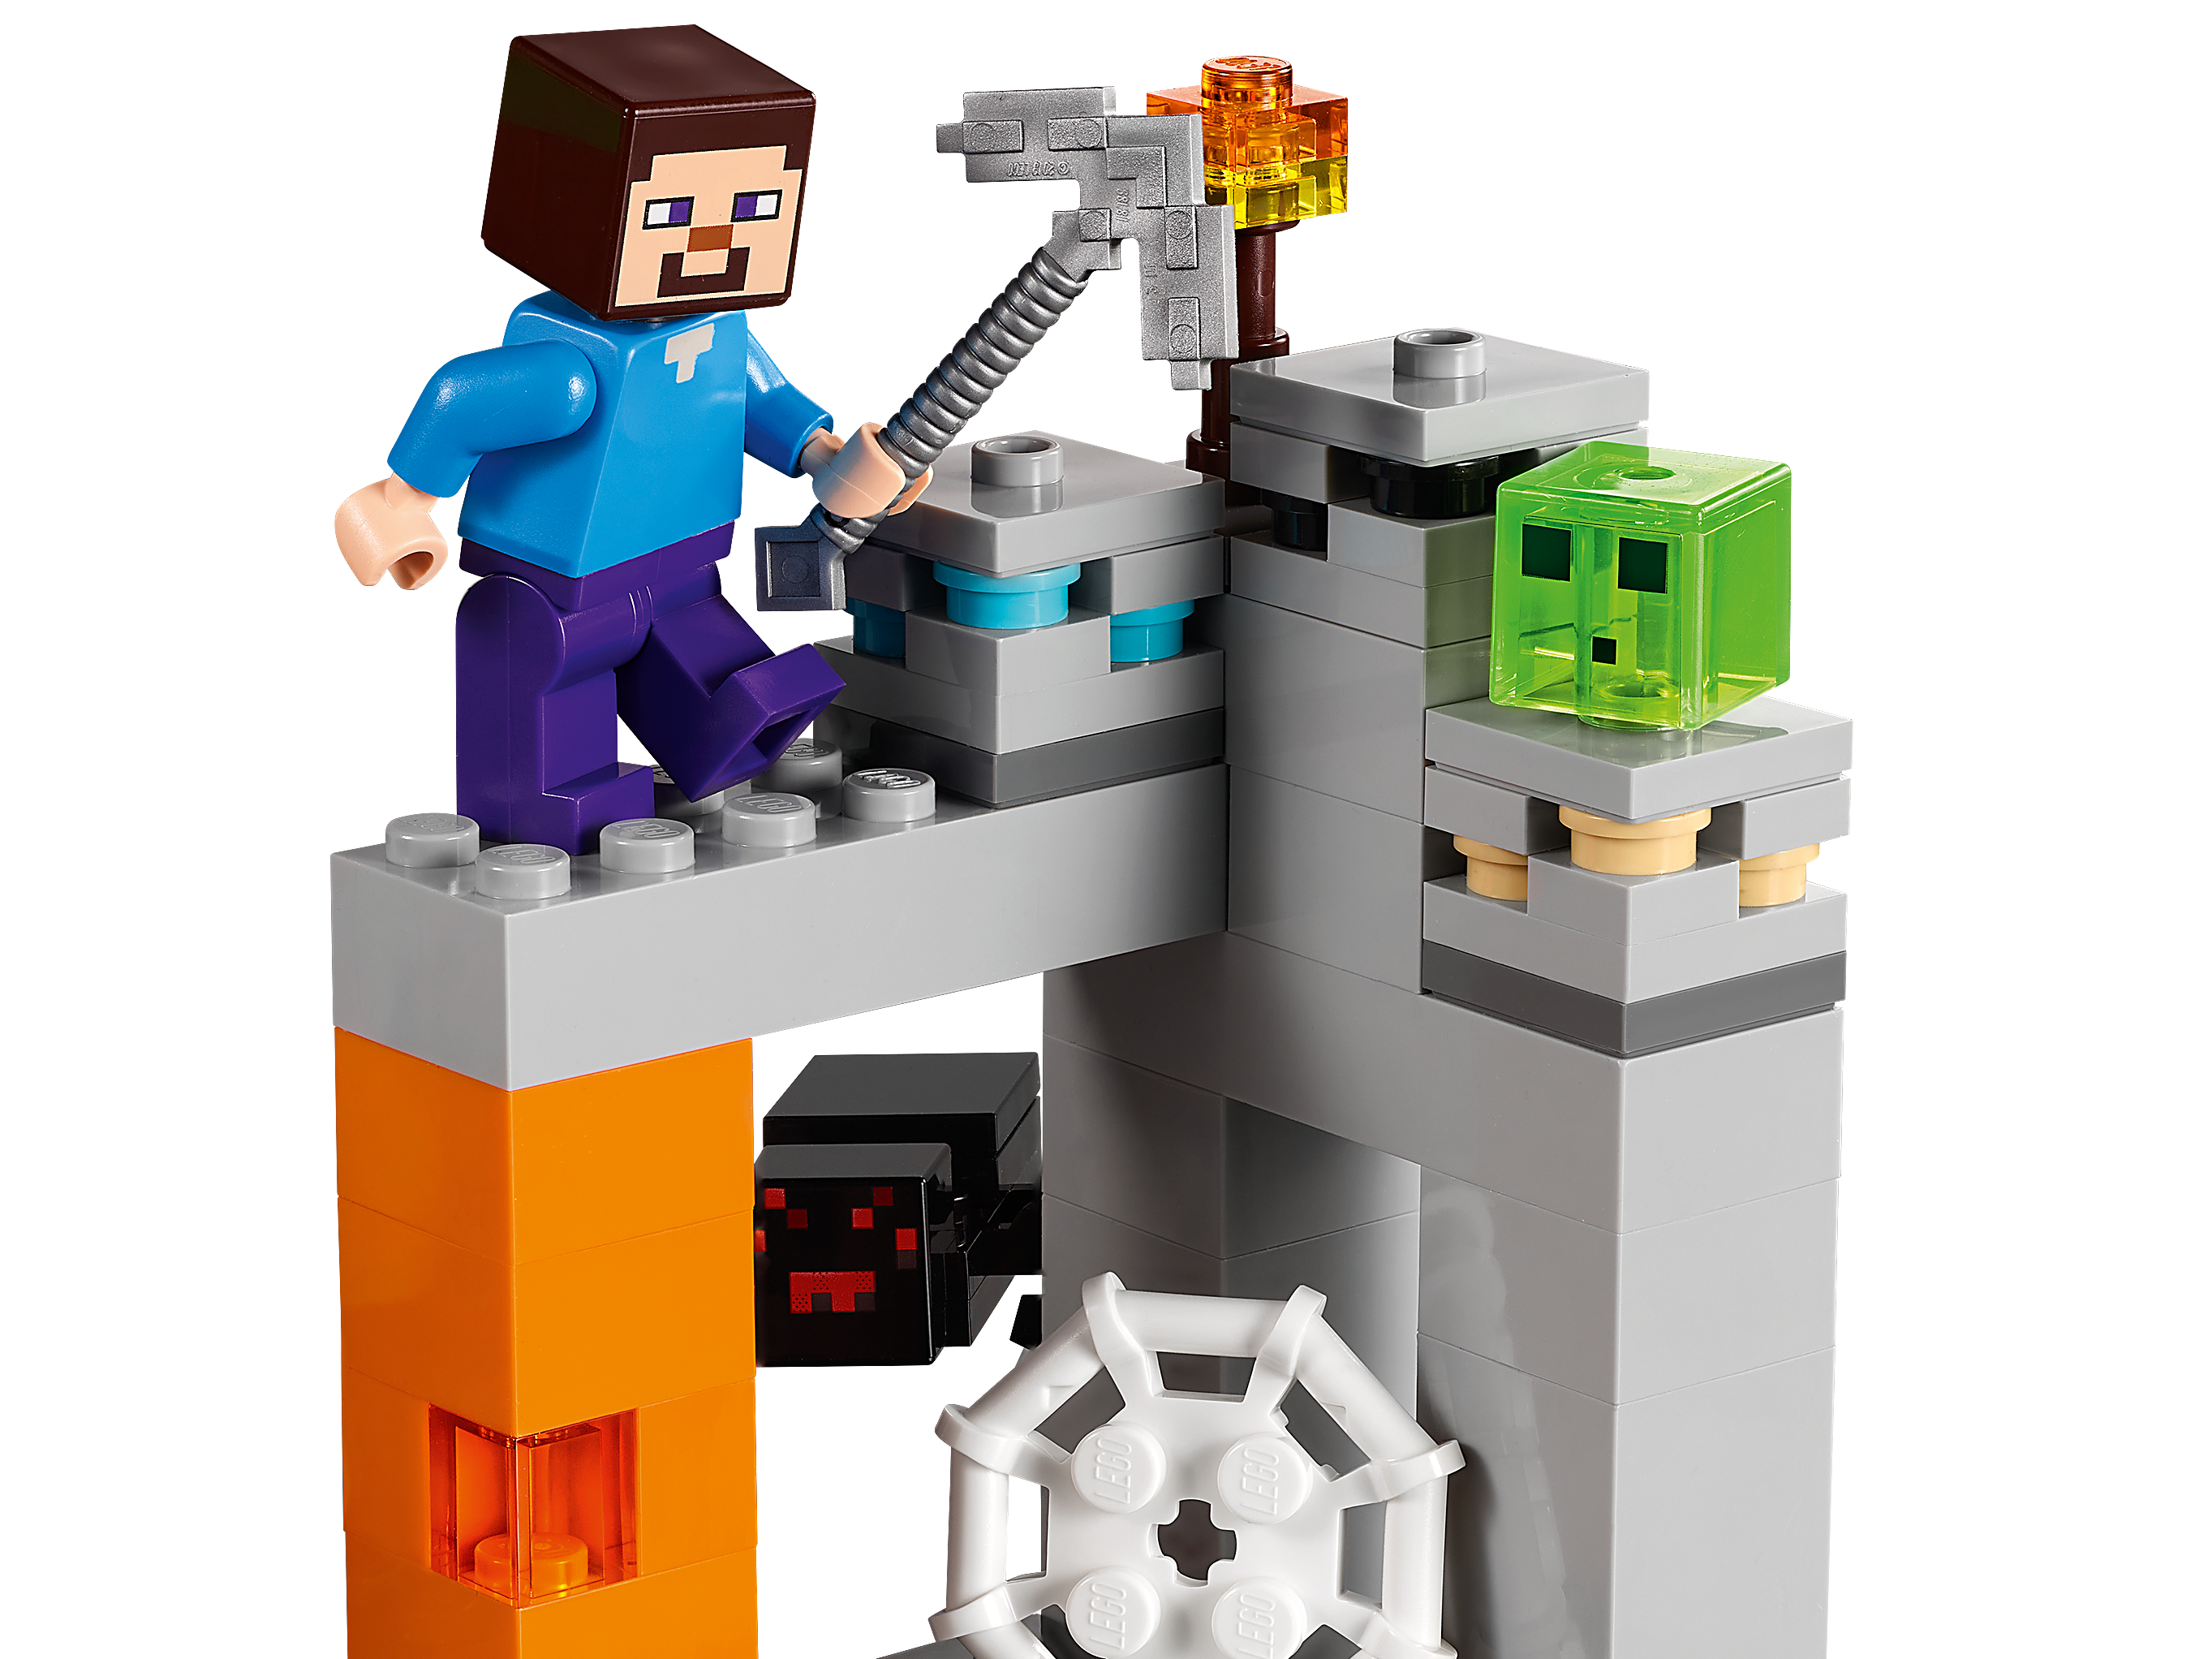 Brick Build Block Lego Minecraft 21166 The Abandoned Mine Childrens Play Toys 6 